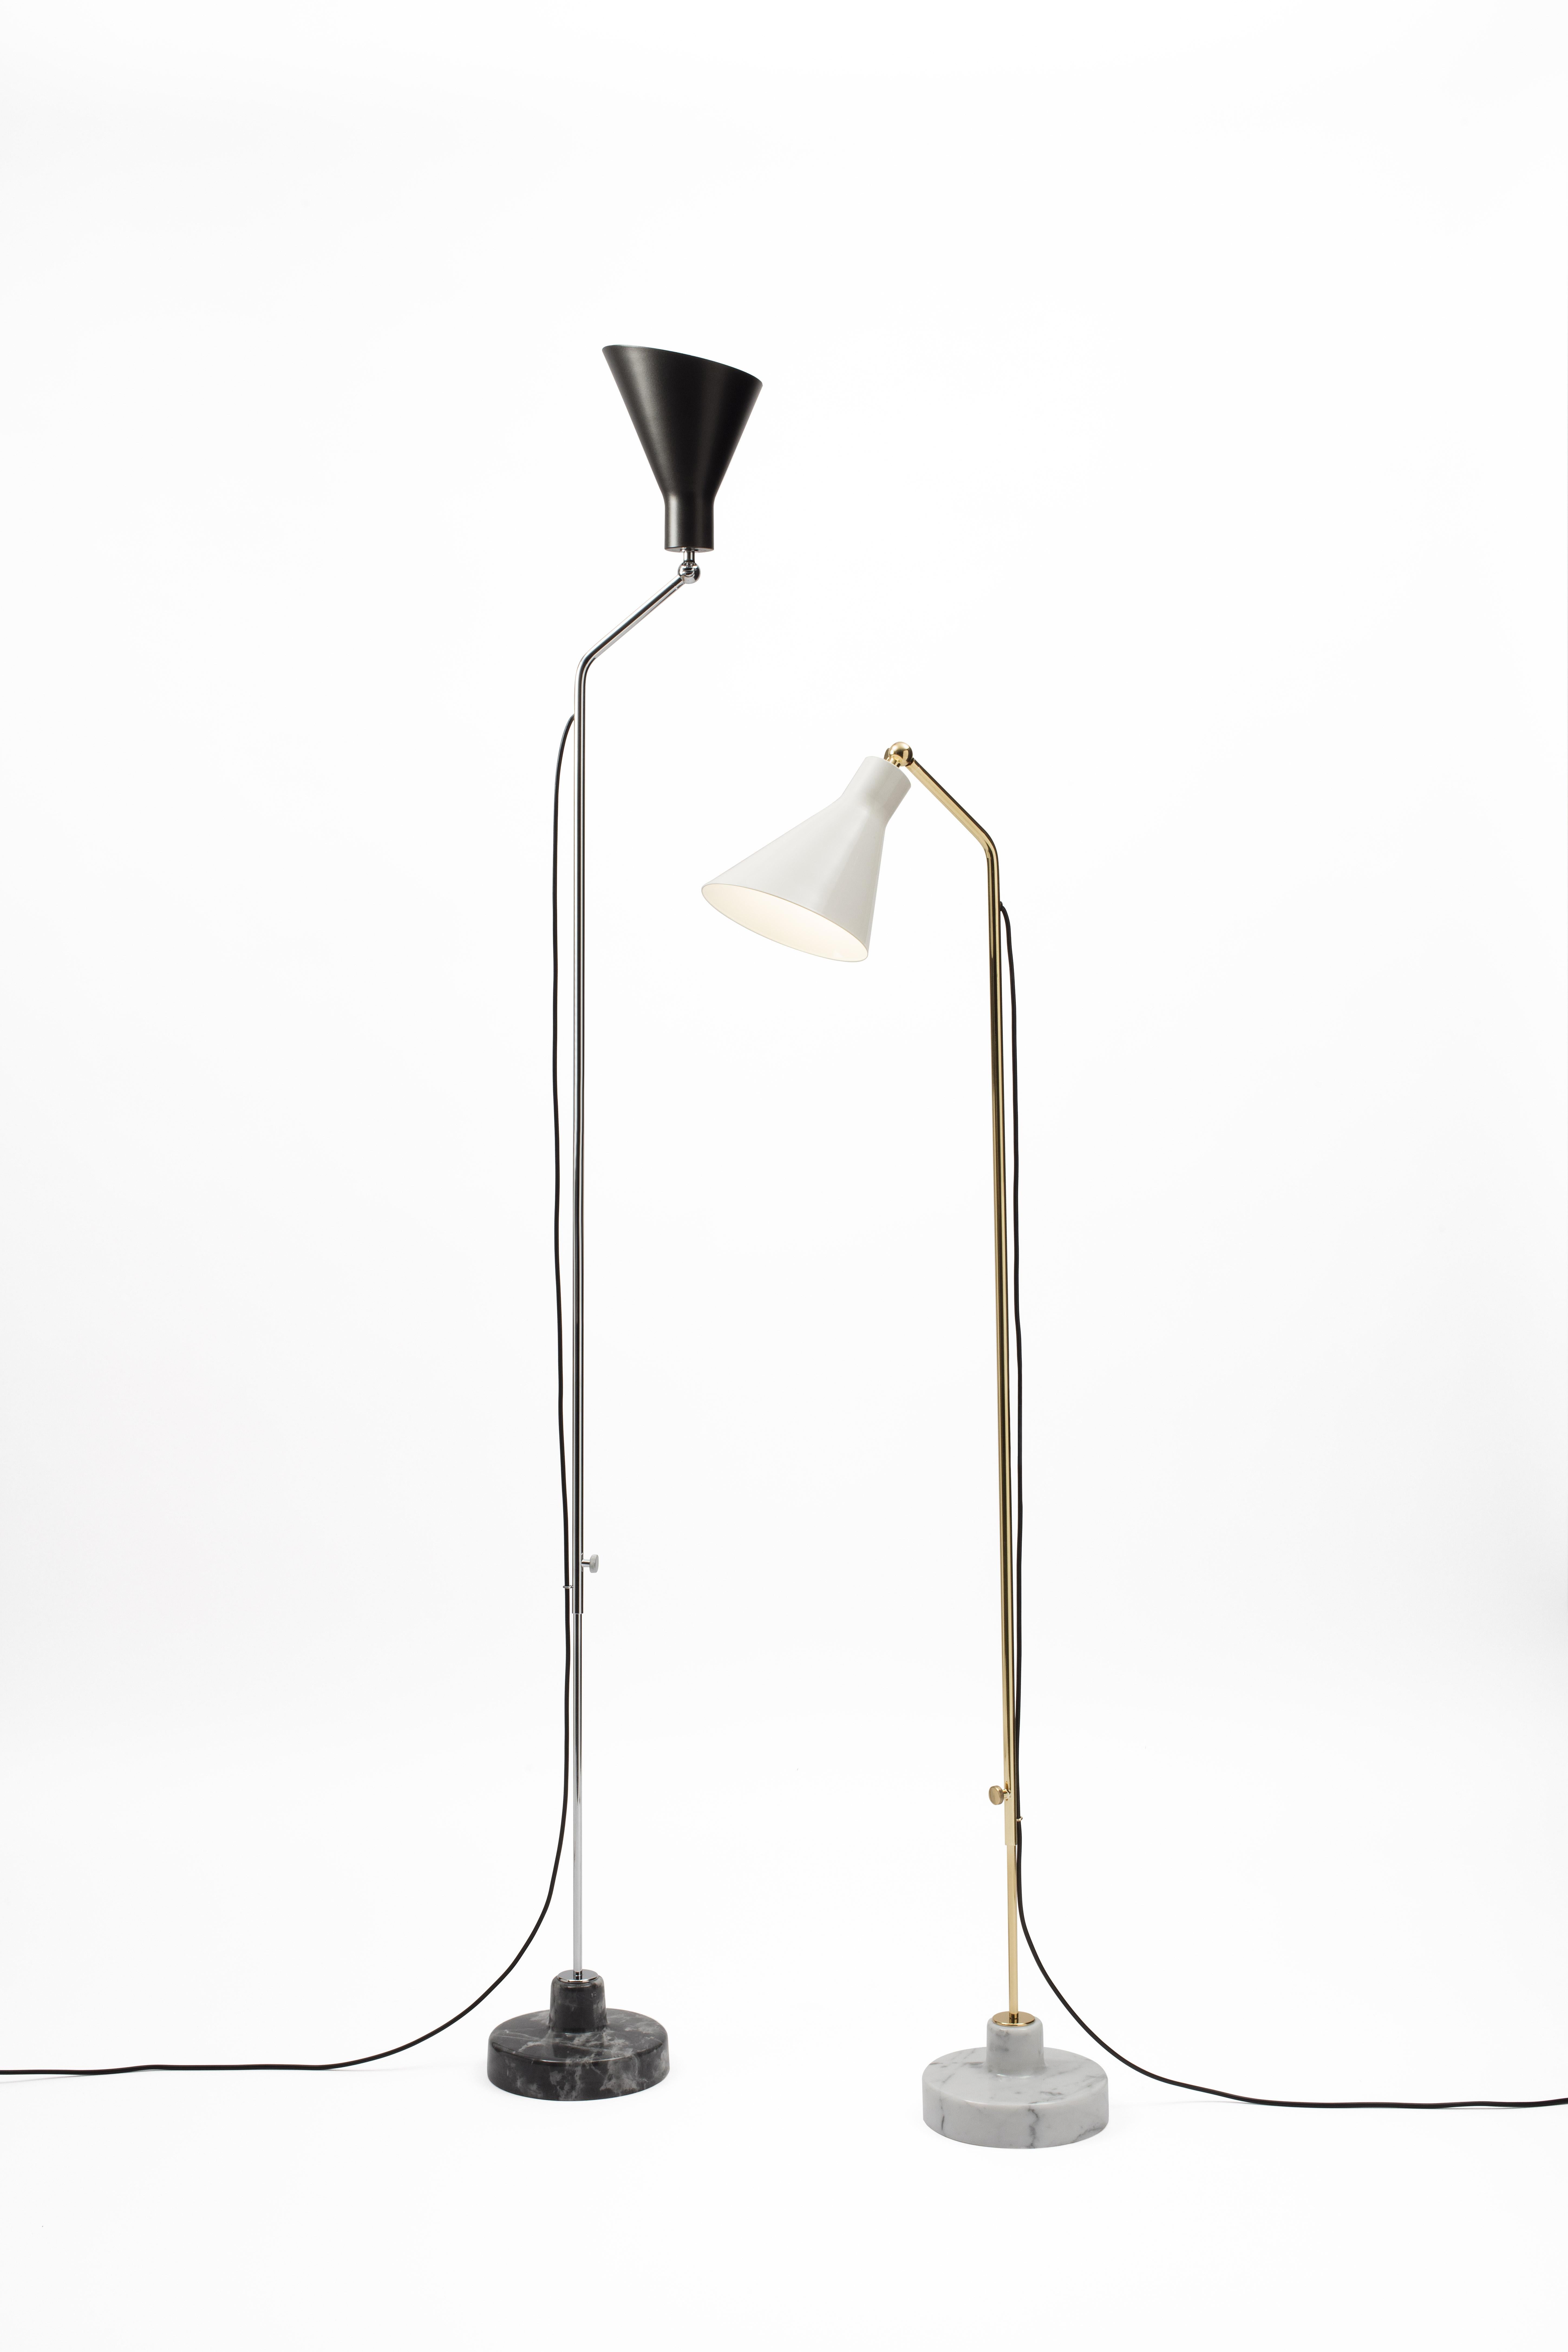 Painted Ignazio Gardella Alzabile Floor Lamp in Brass, Metal and Marble for Tato Italia For Sale